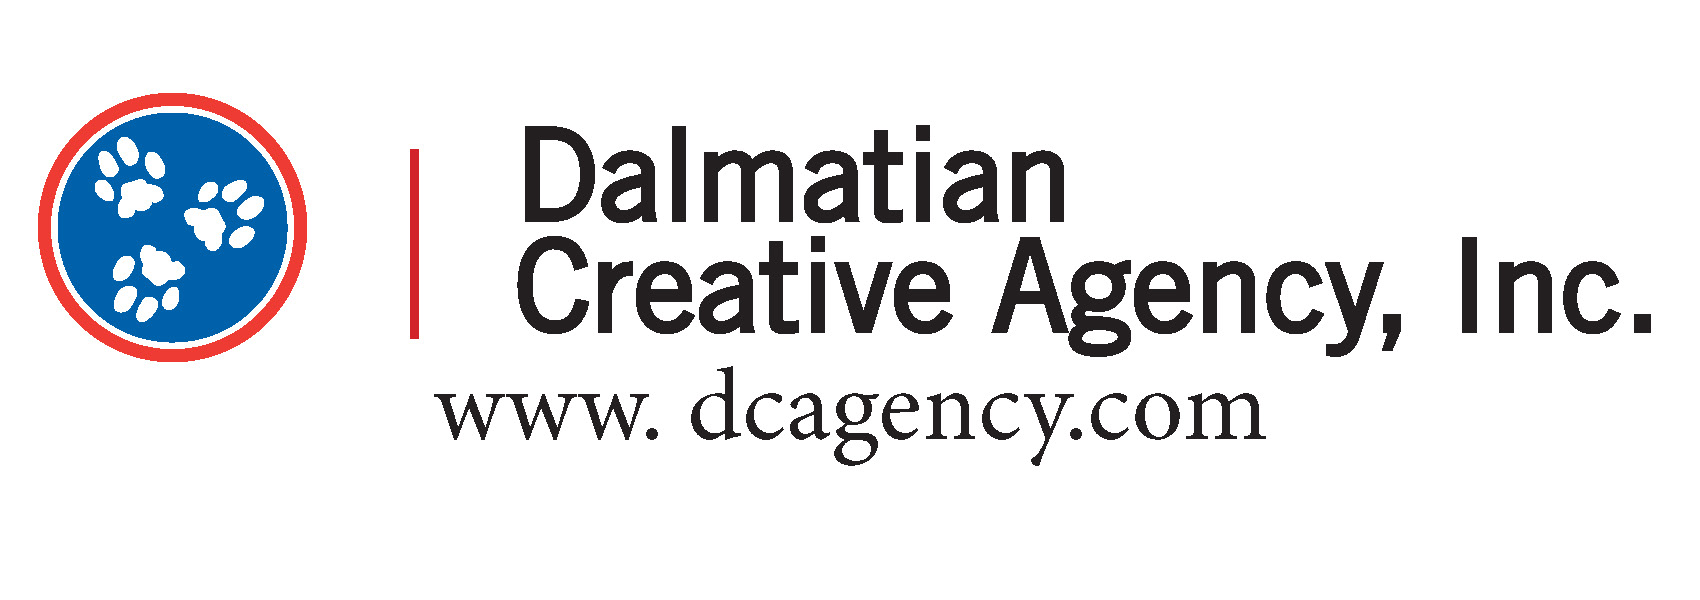 Dalmatian Creative Agency Inc's Logo